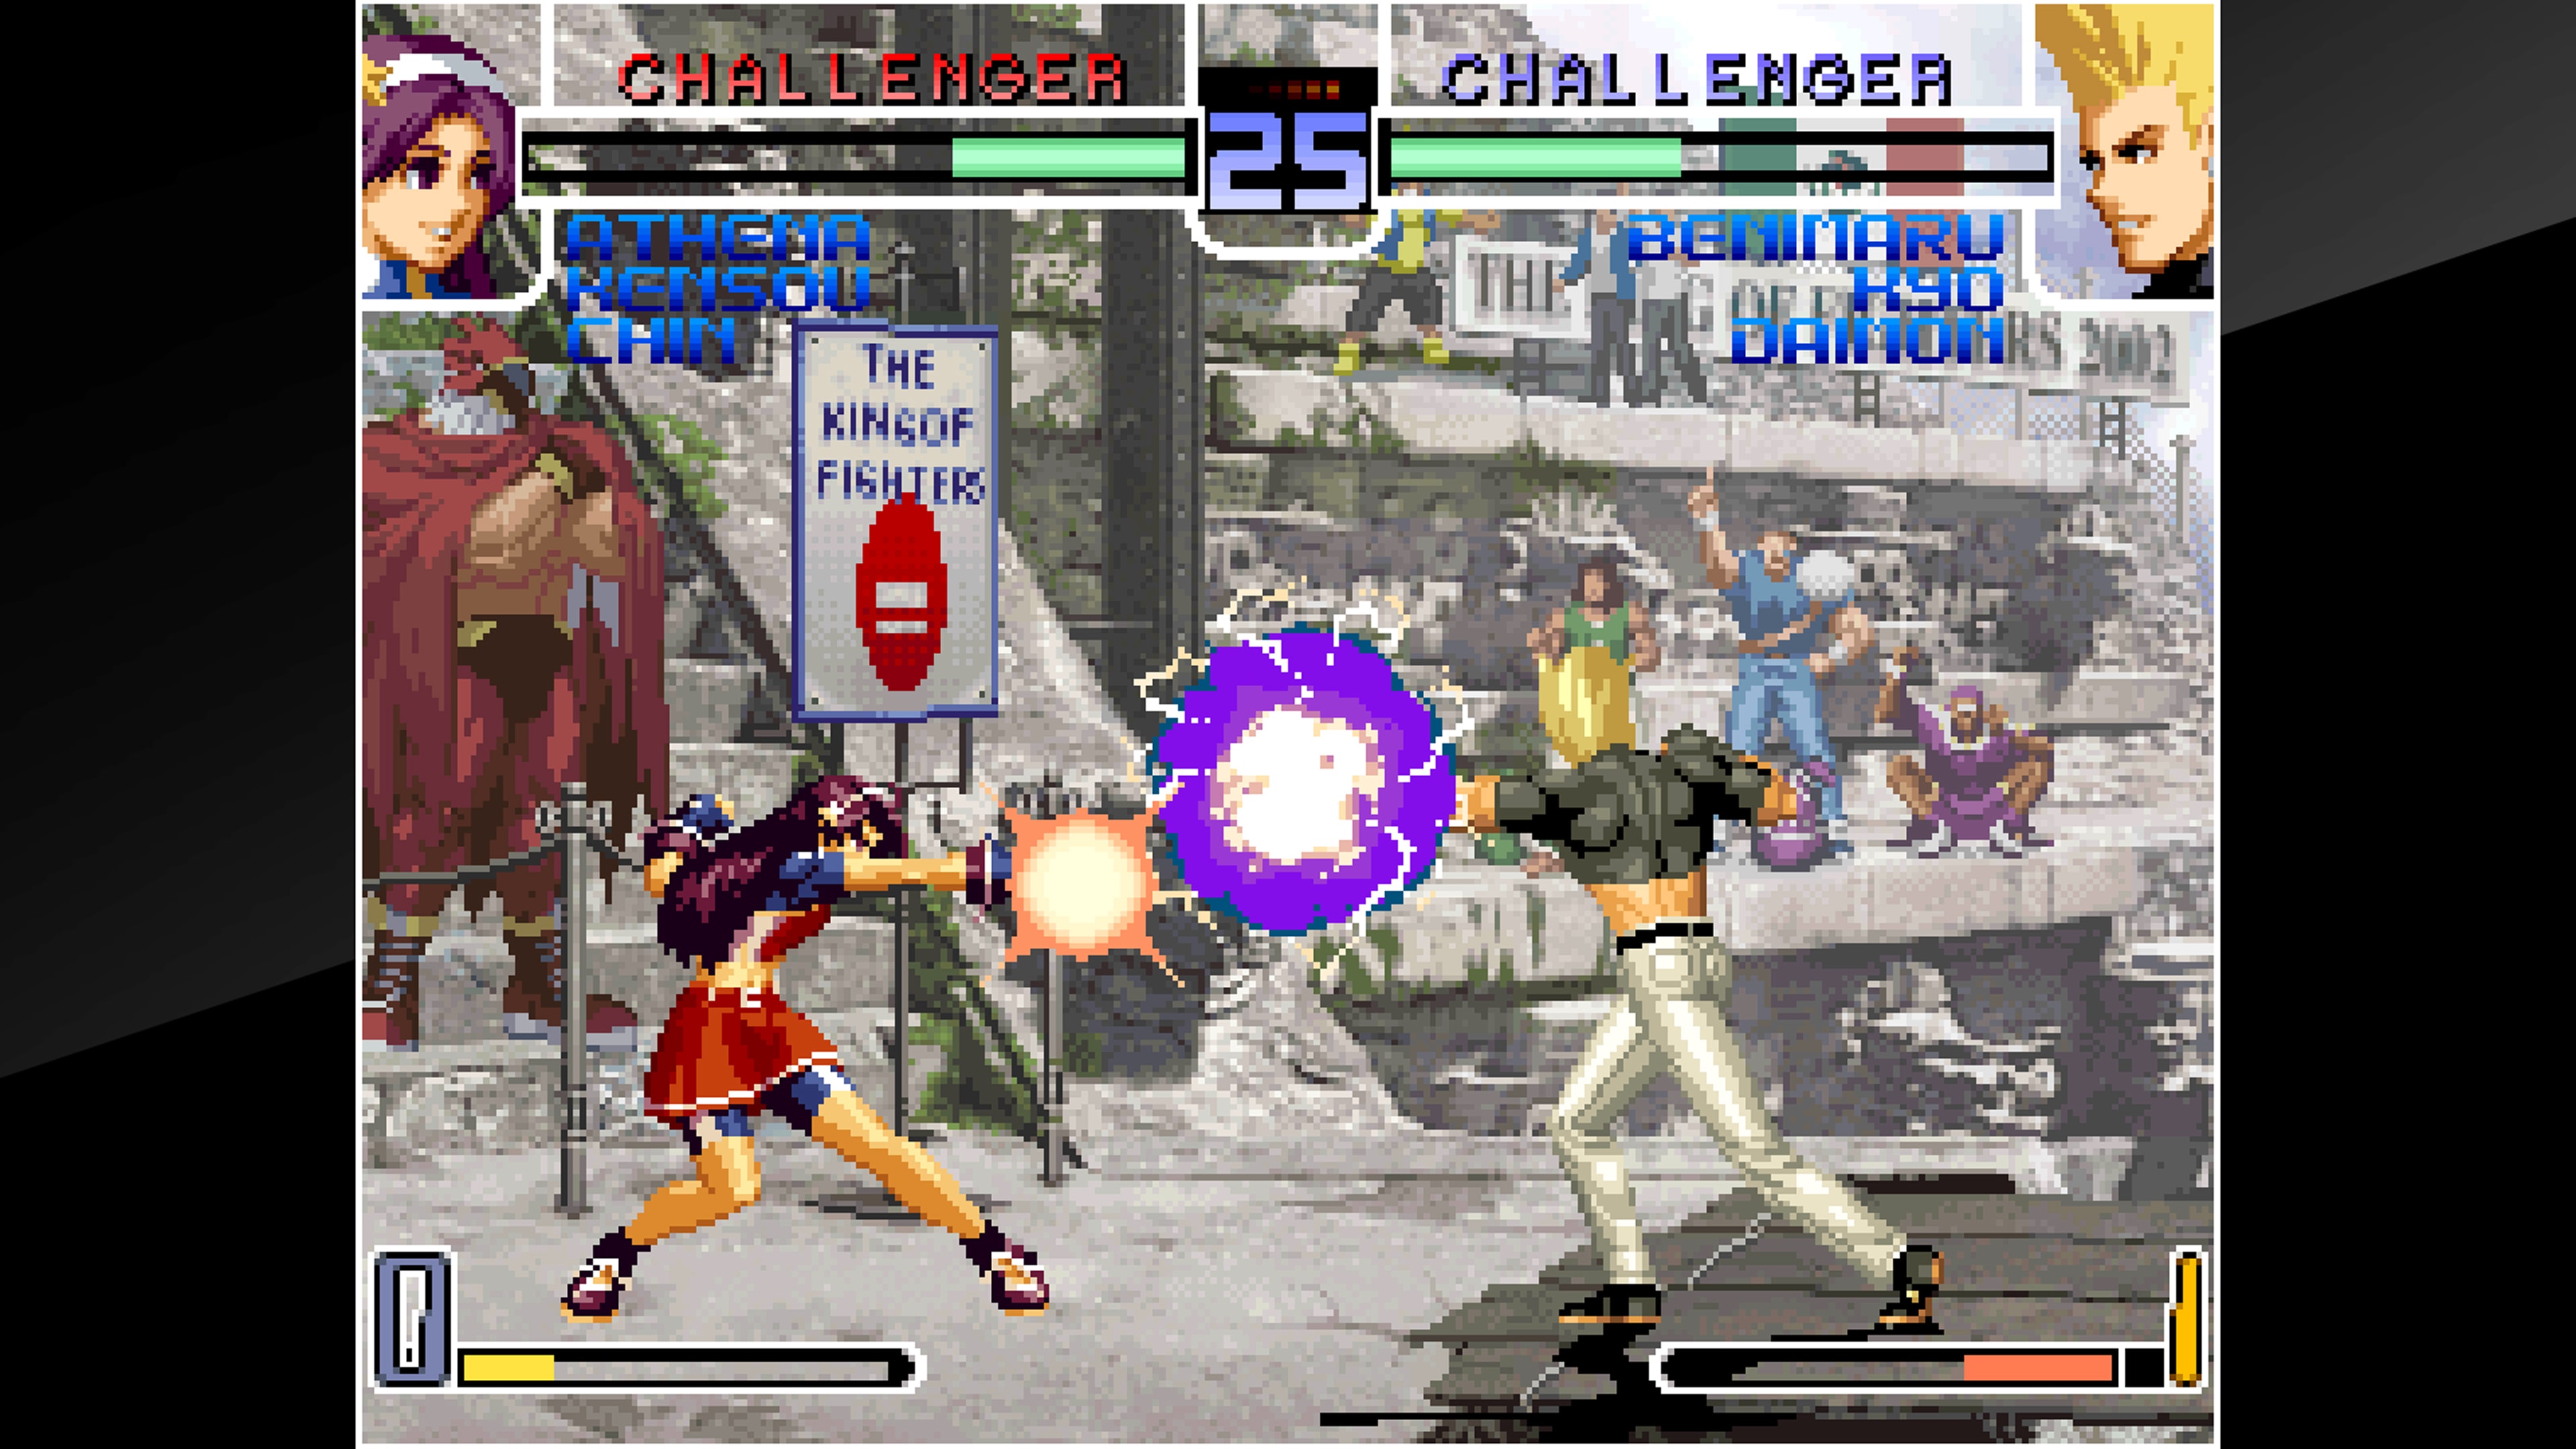 The King of Fighters 2002 kof 2k02 ps3 psn - Donattelo Games